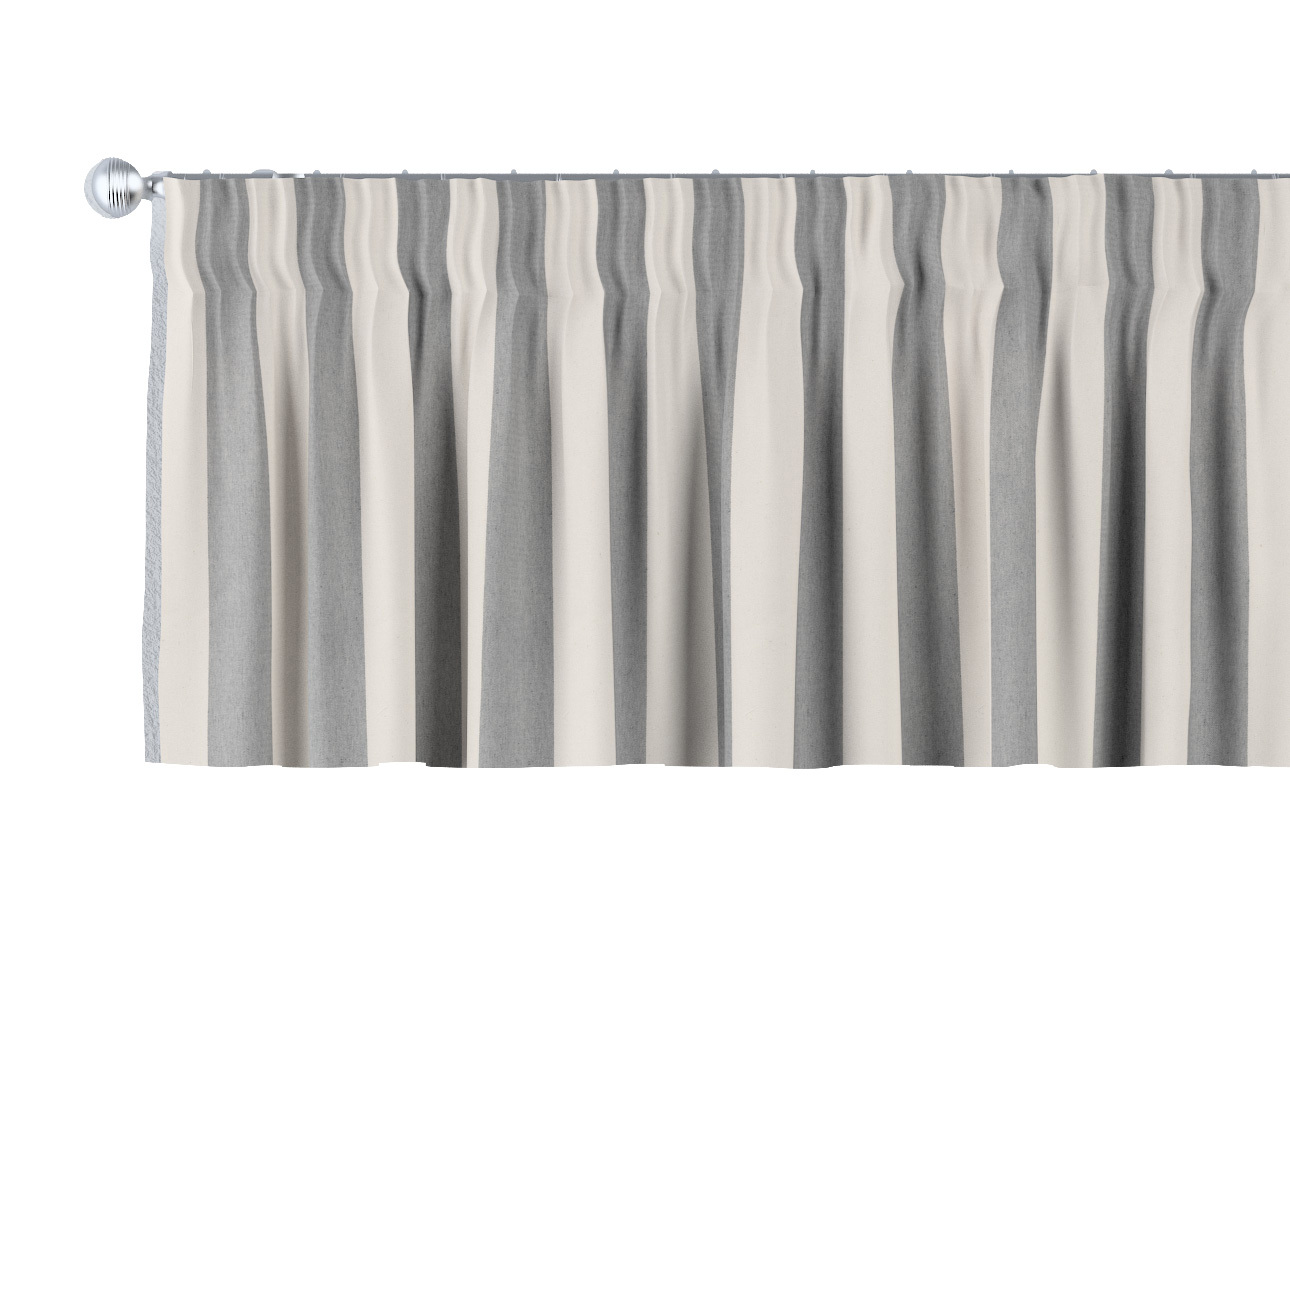 Kurzgardine mit Kräuselband, weiß-grau, 130 x 40 cm, Quadro (143-91) günstig online kaufen